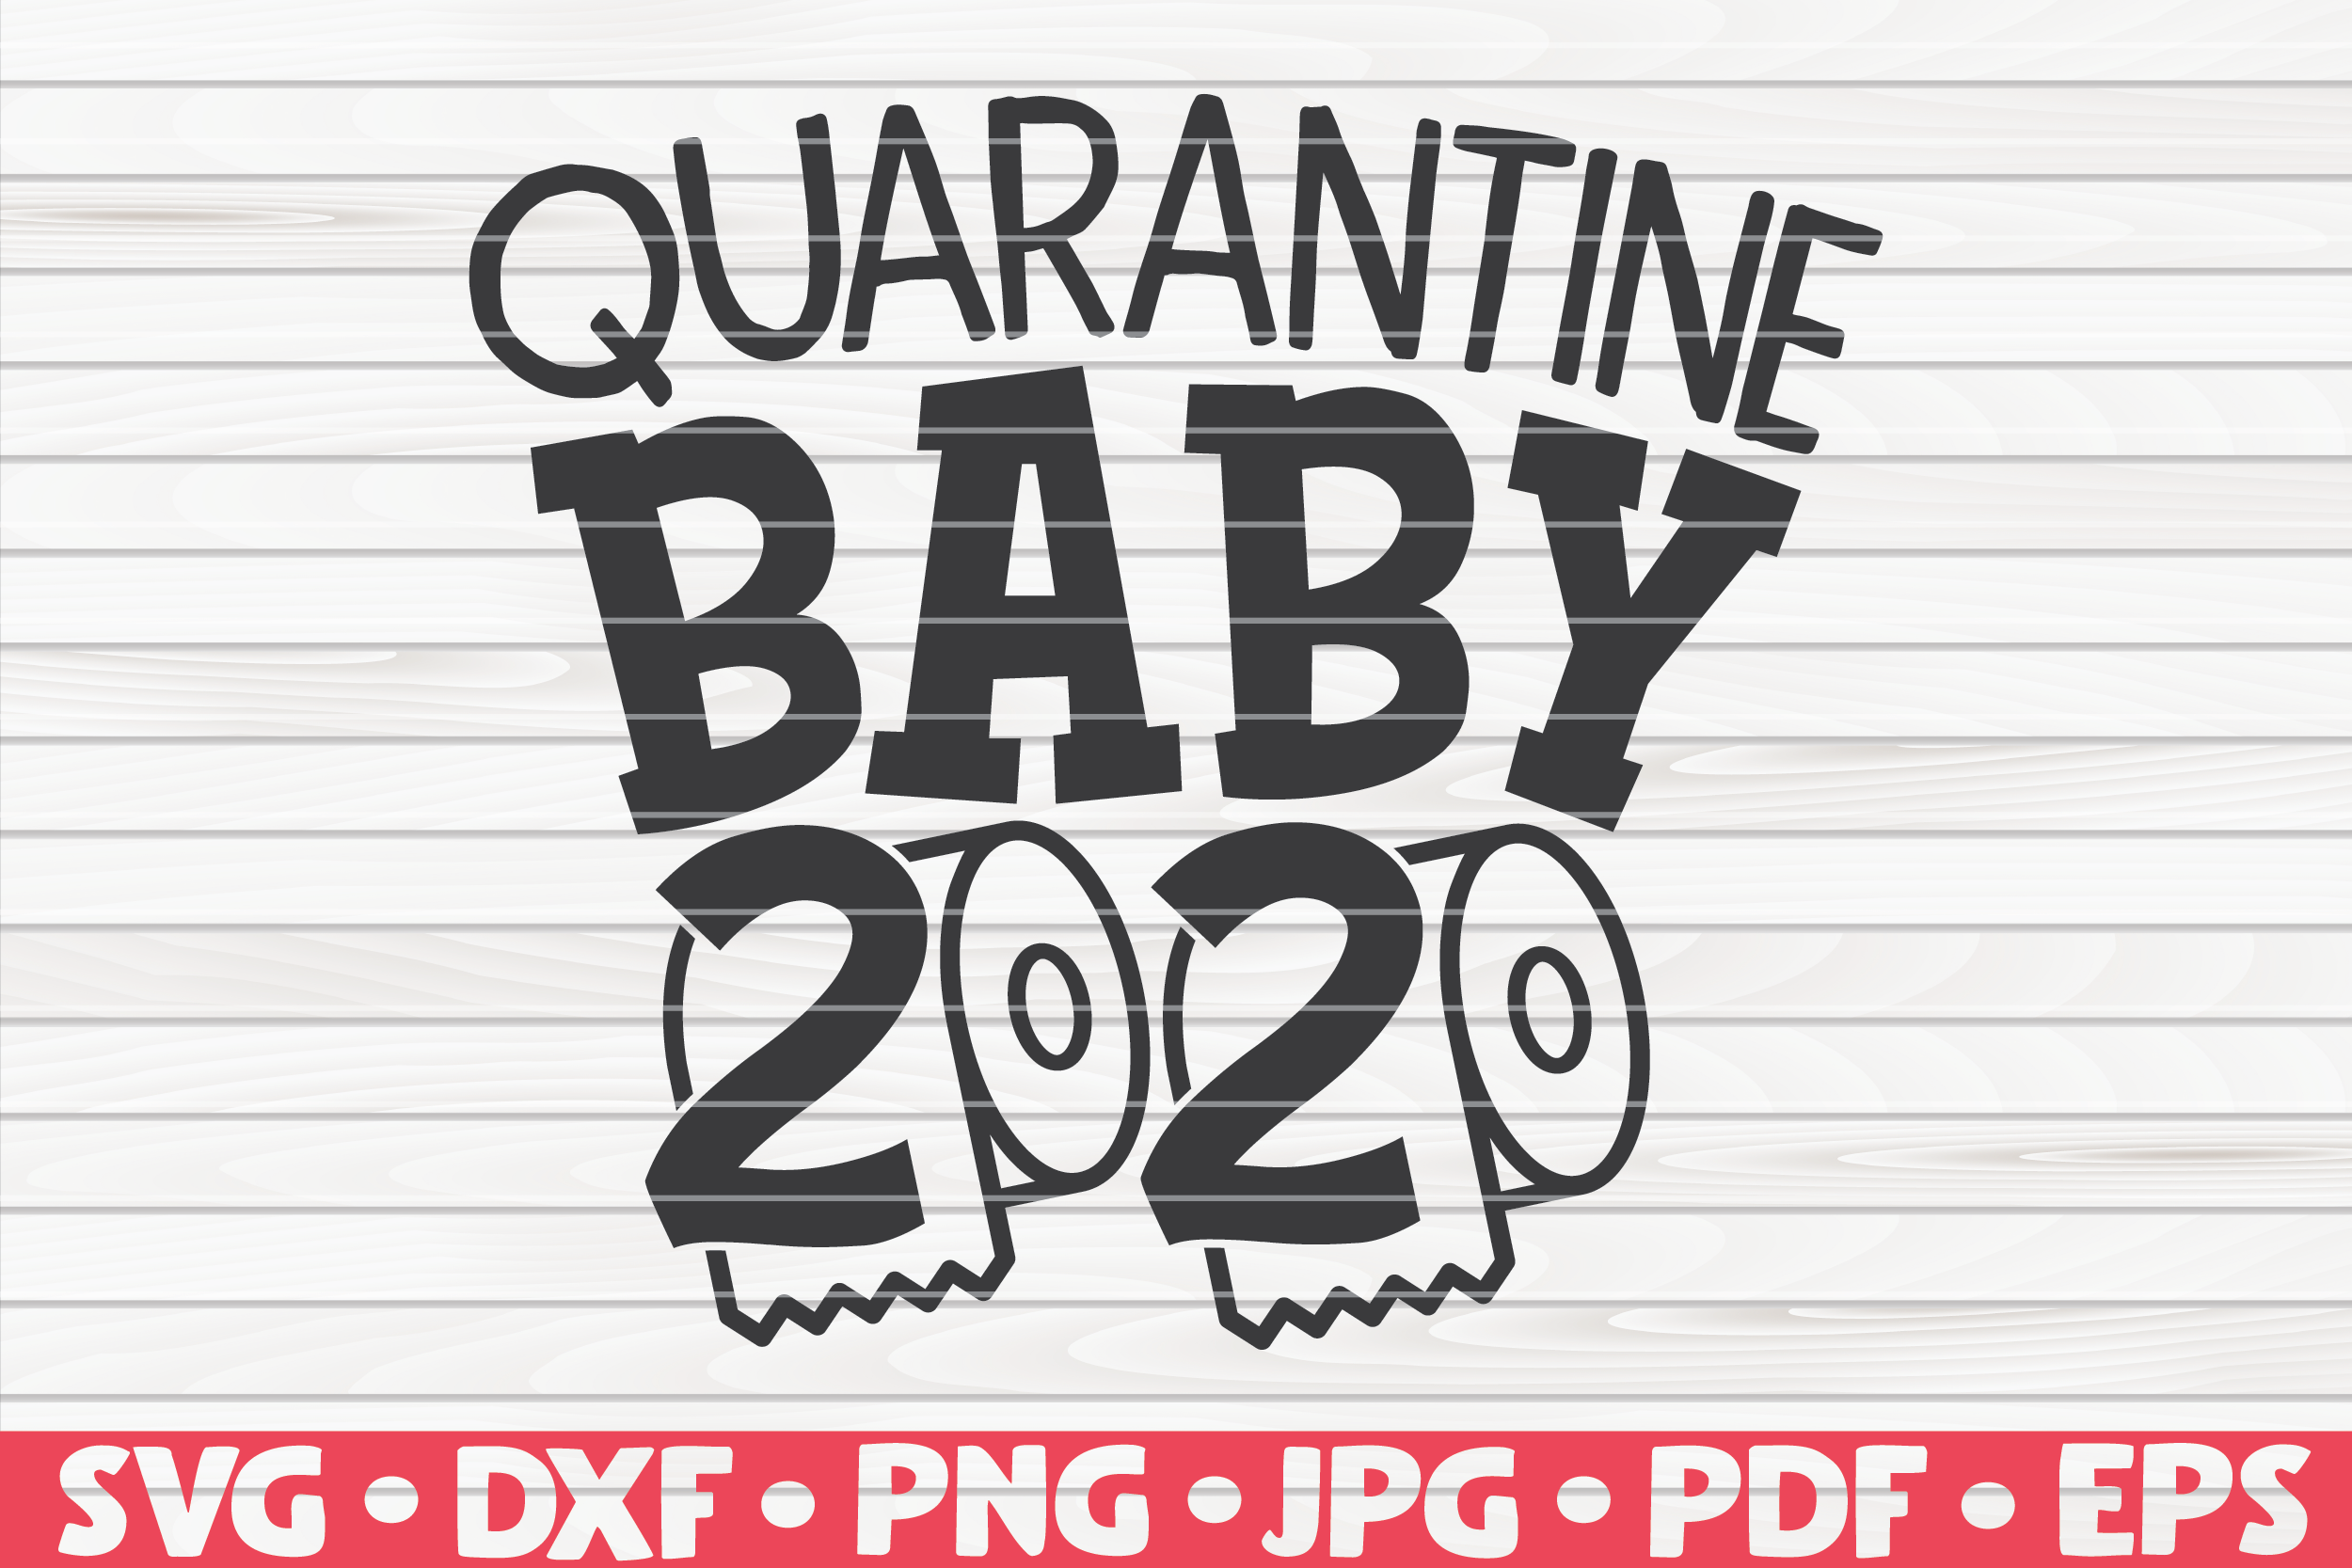 Download Quarantine baby 2020 SVG | Quarantine / Social distancing By HQDigitalArt | TheHungryJPEG.com